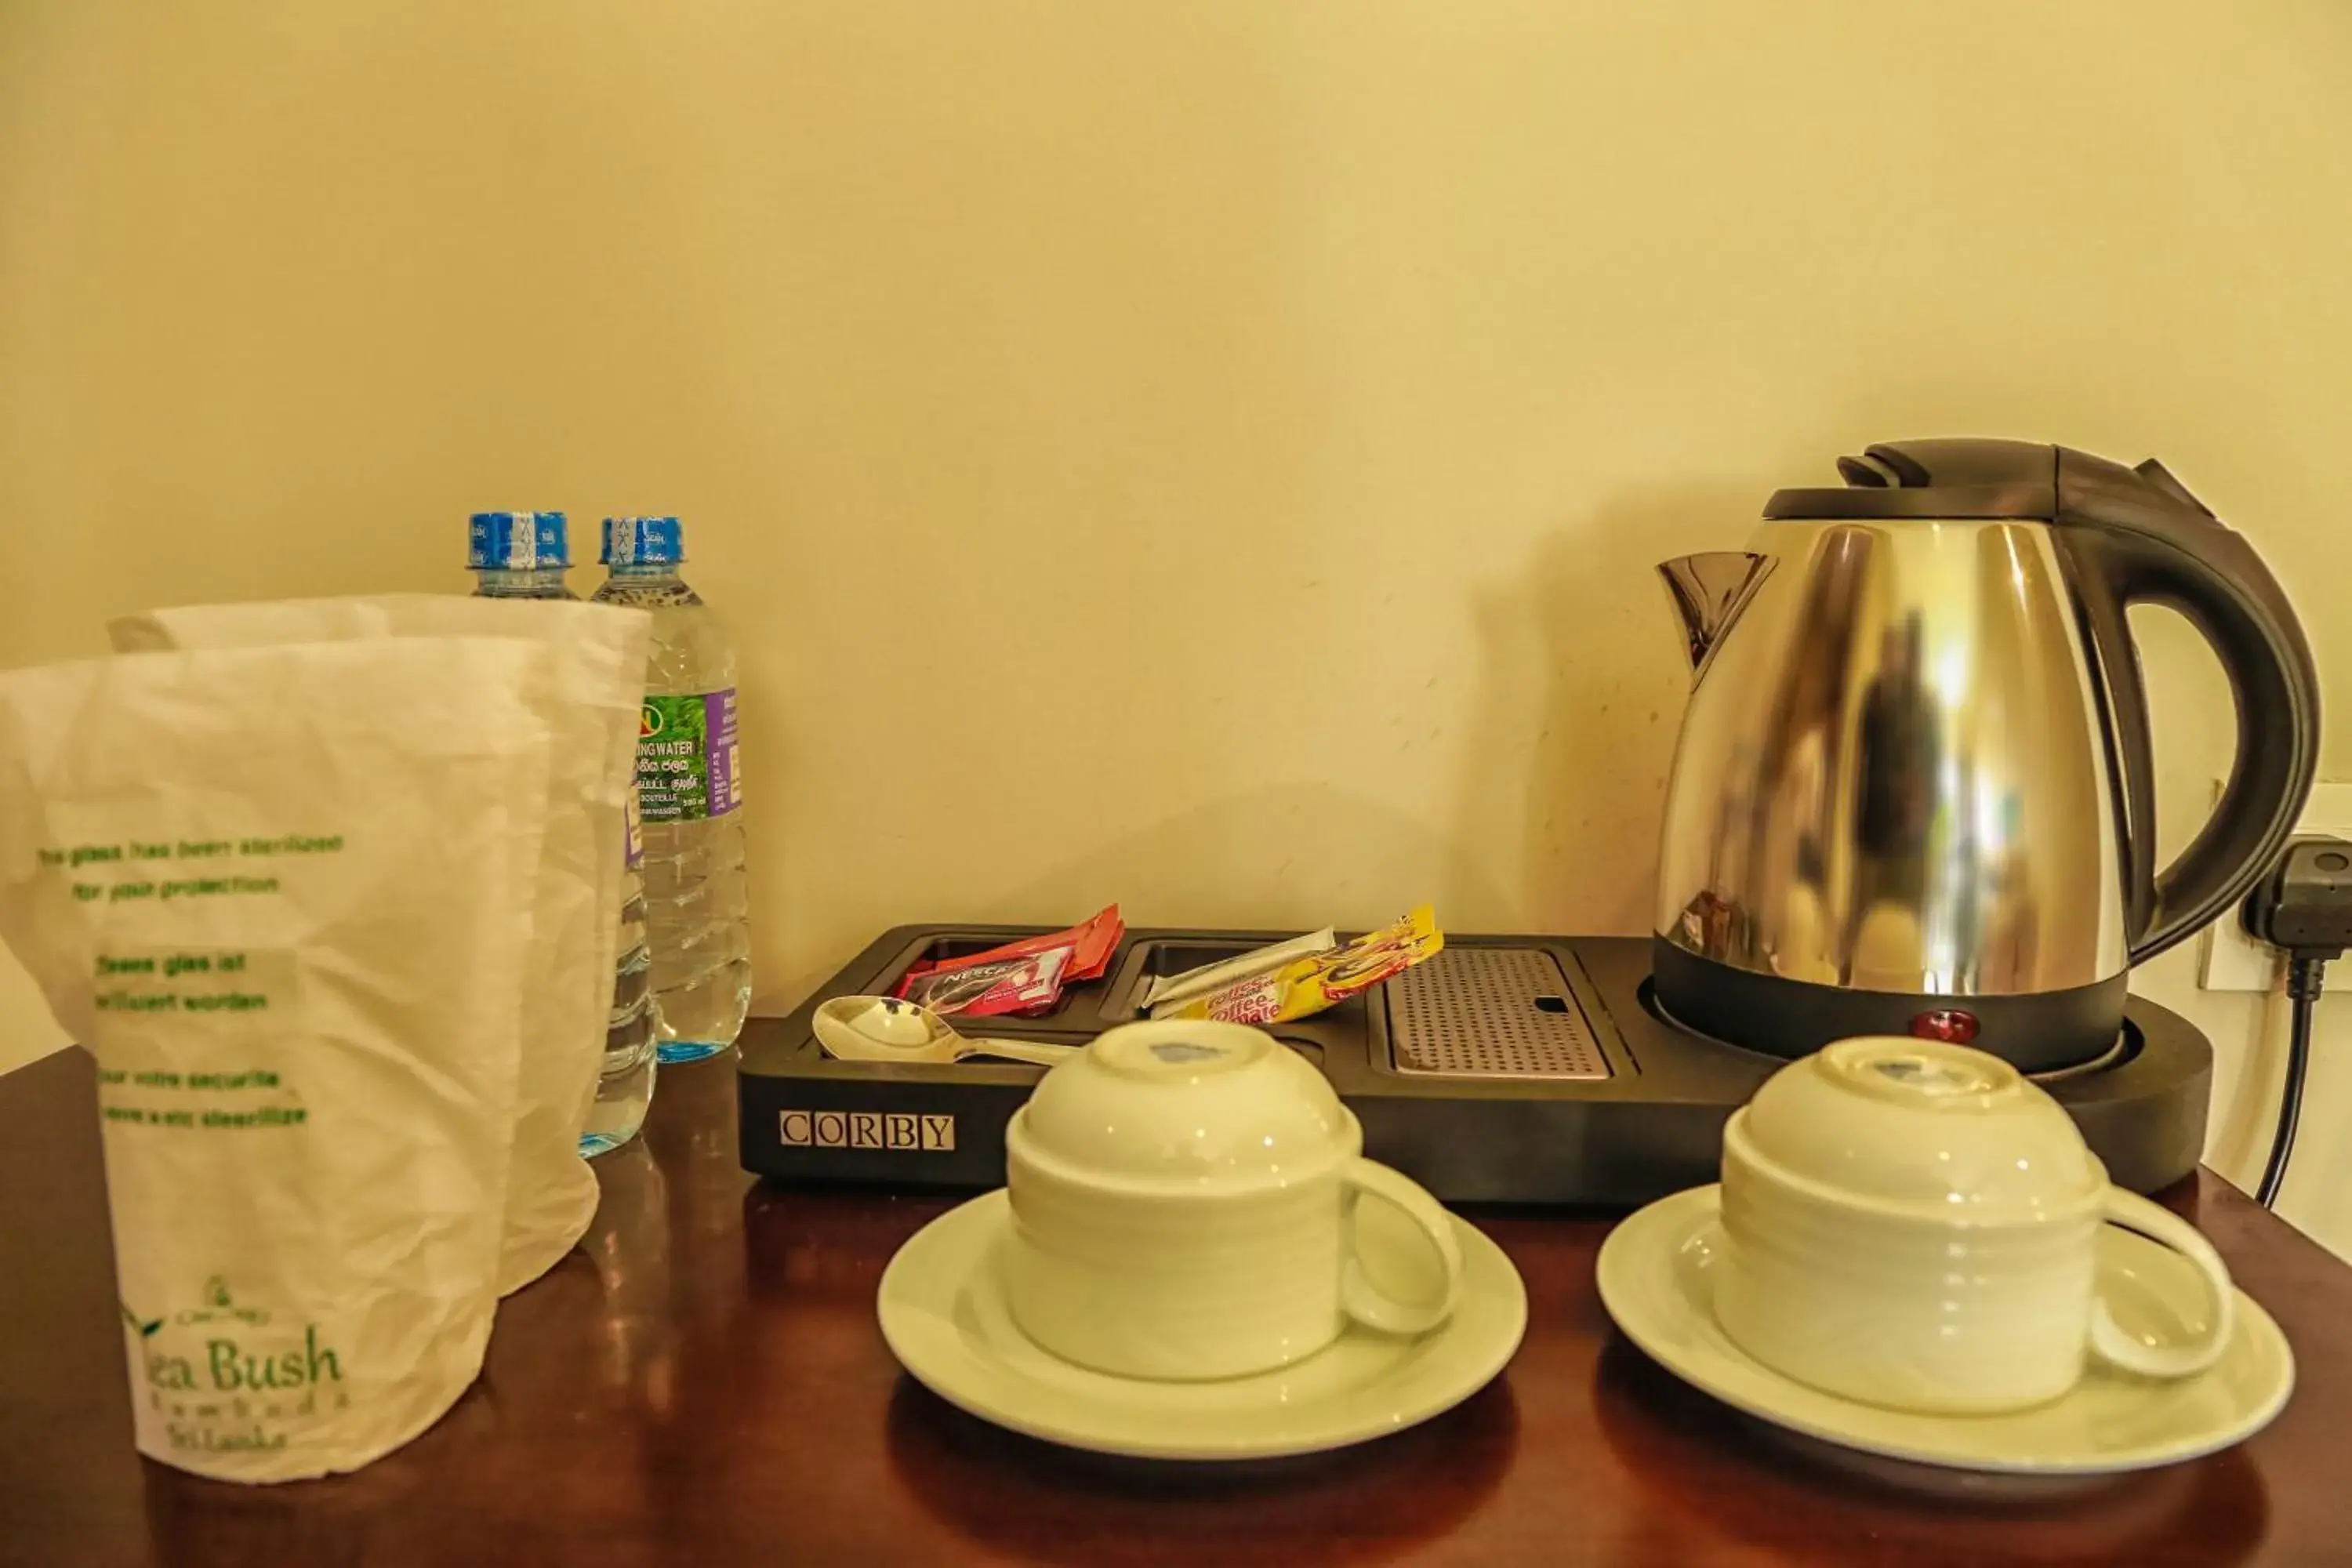 Coffee/Tea Facilities in Oak Ray Hotel - Tea Bush Ramboda